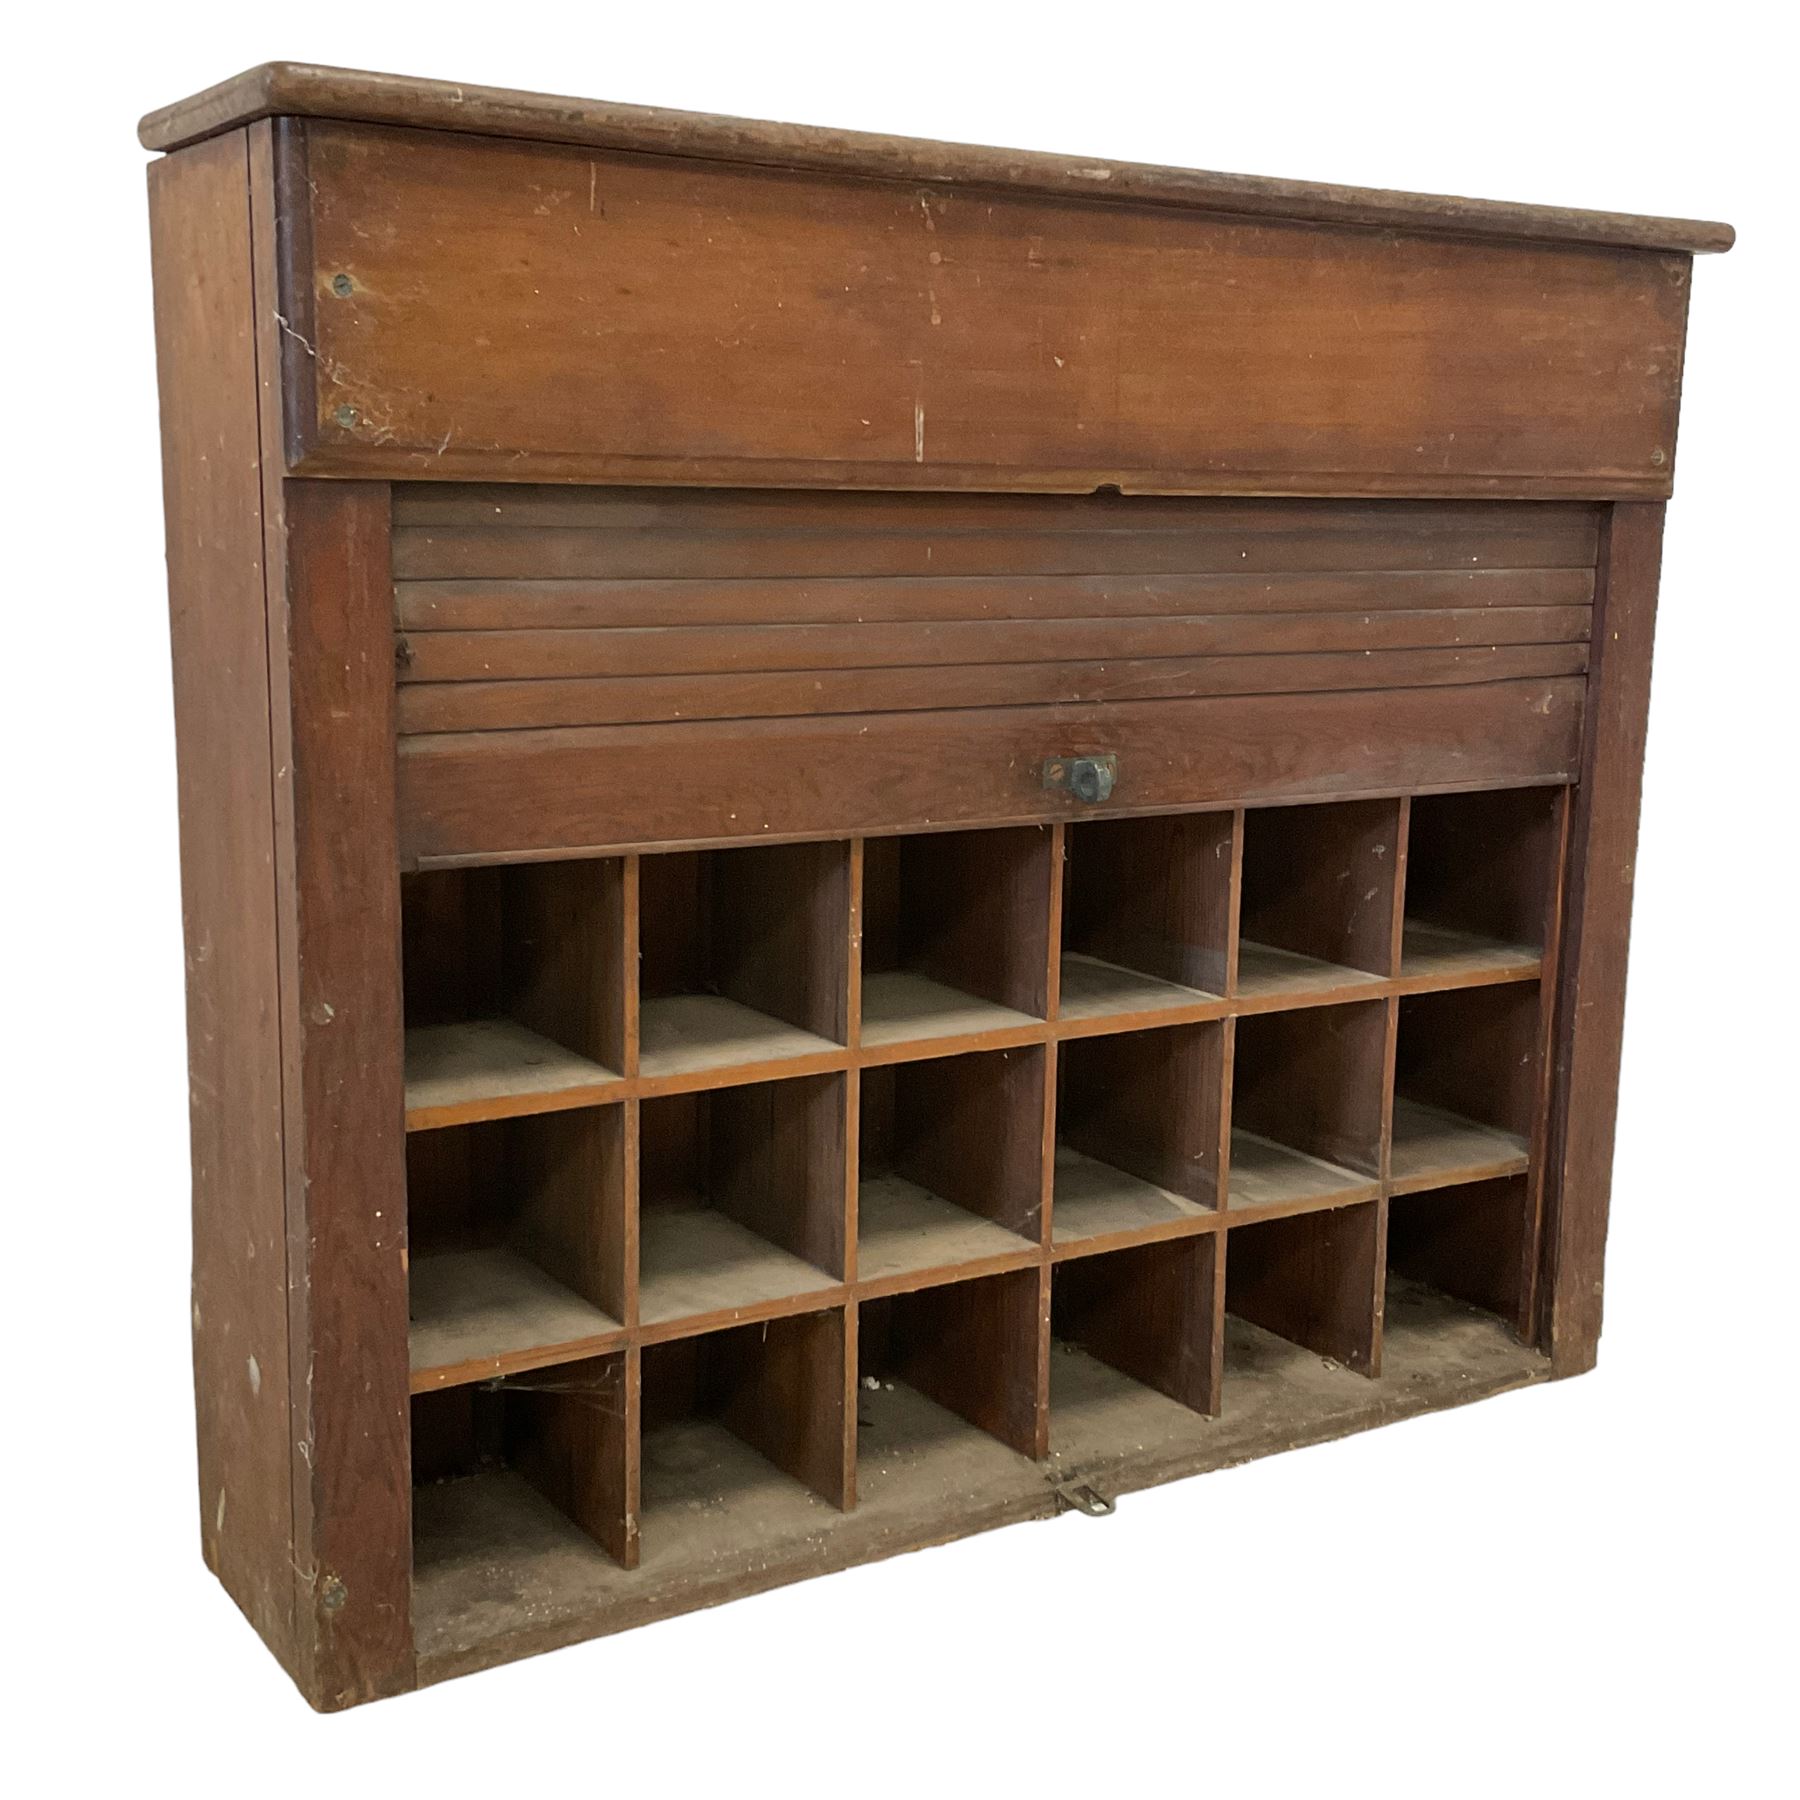 19th century oak hotel or post office pigeonhole cabinet